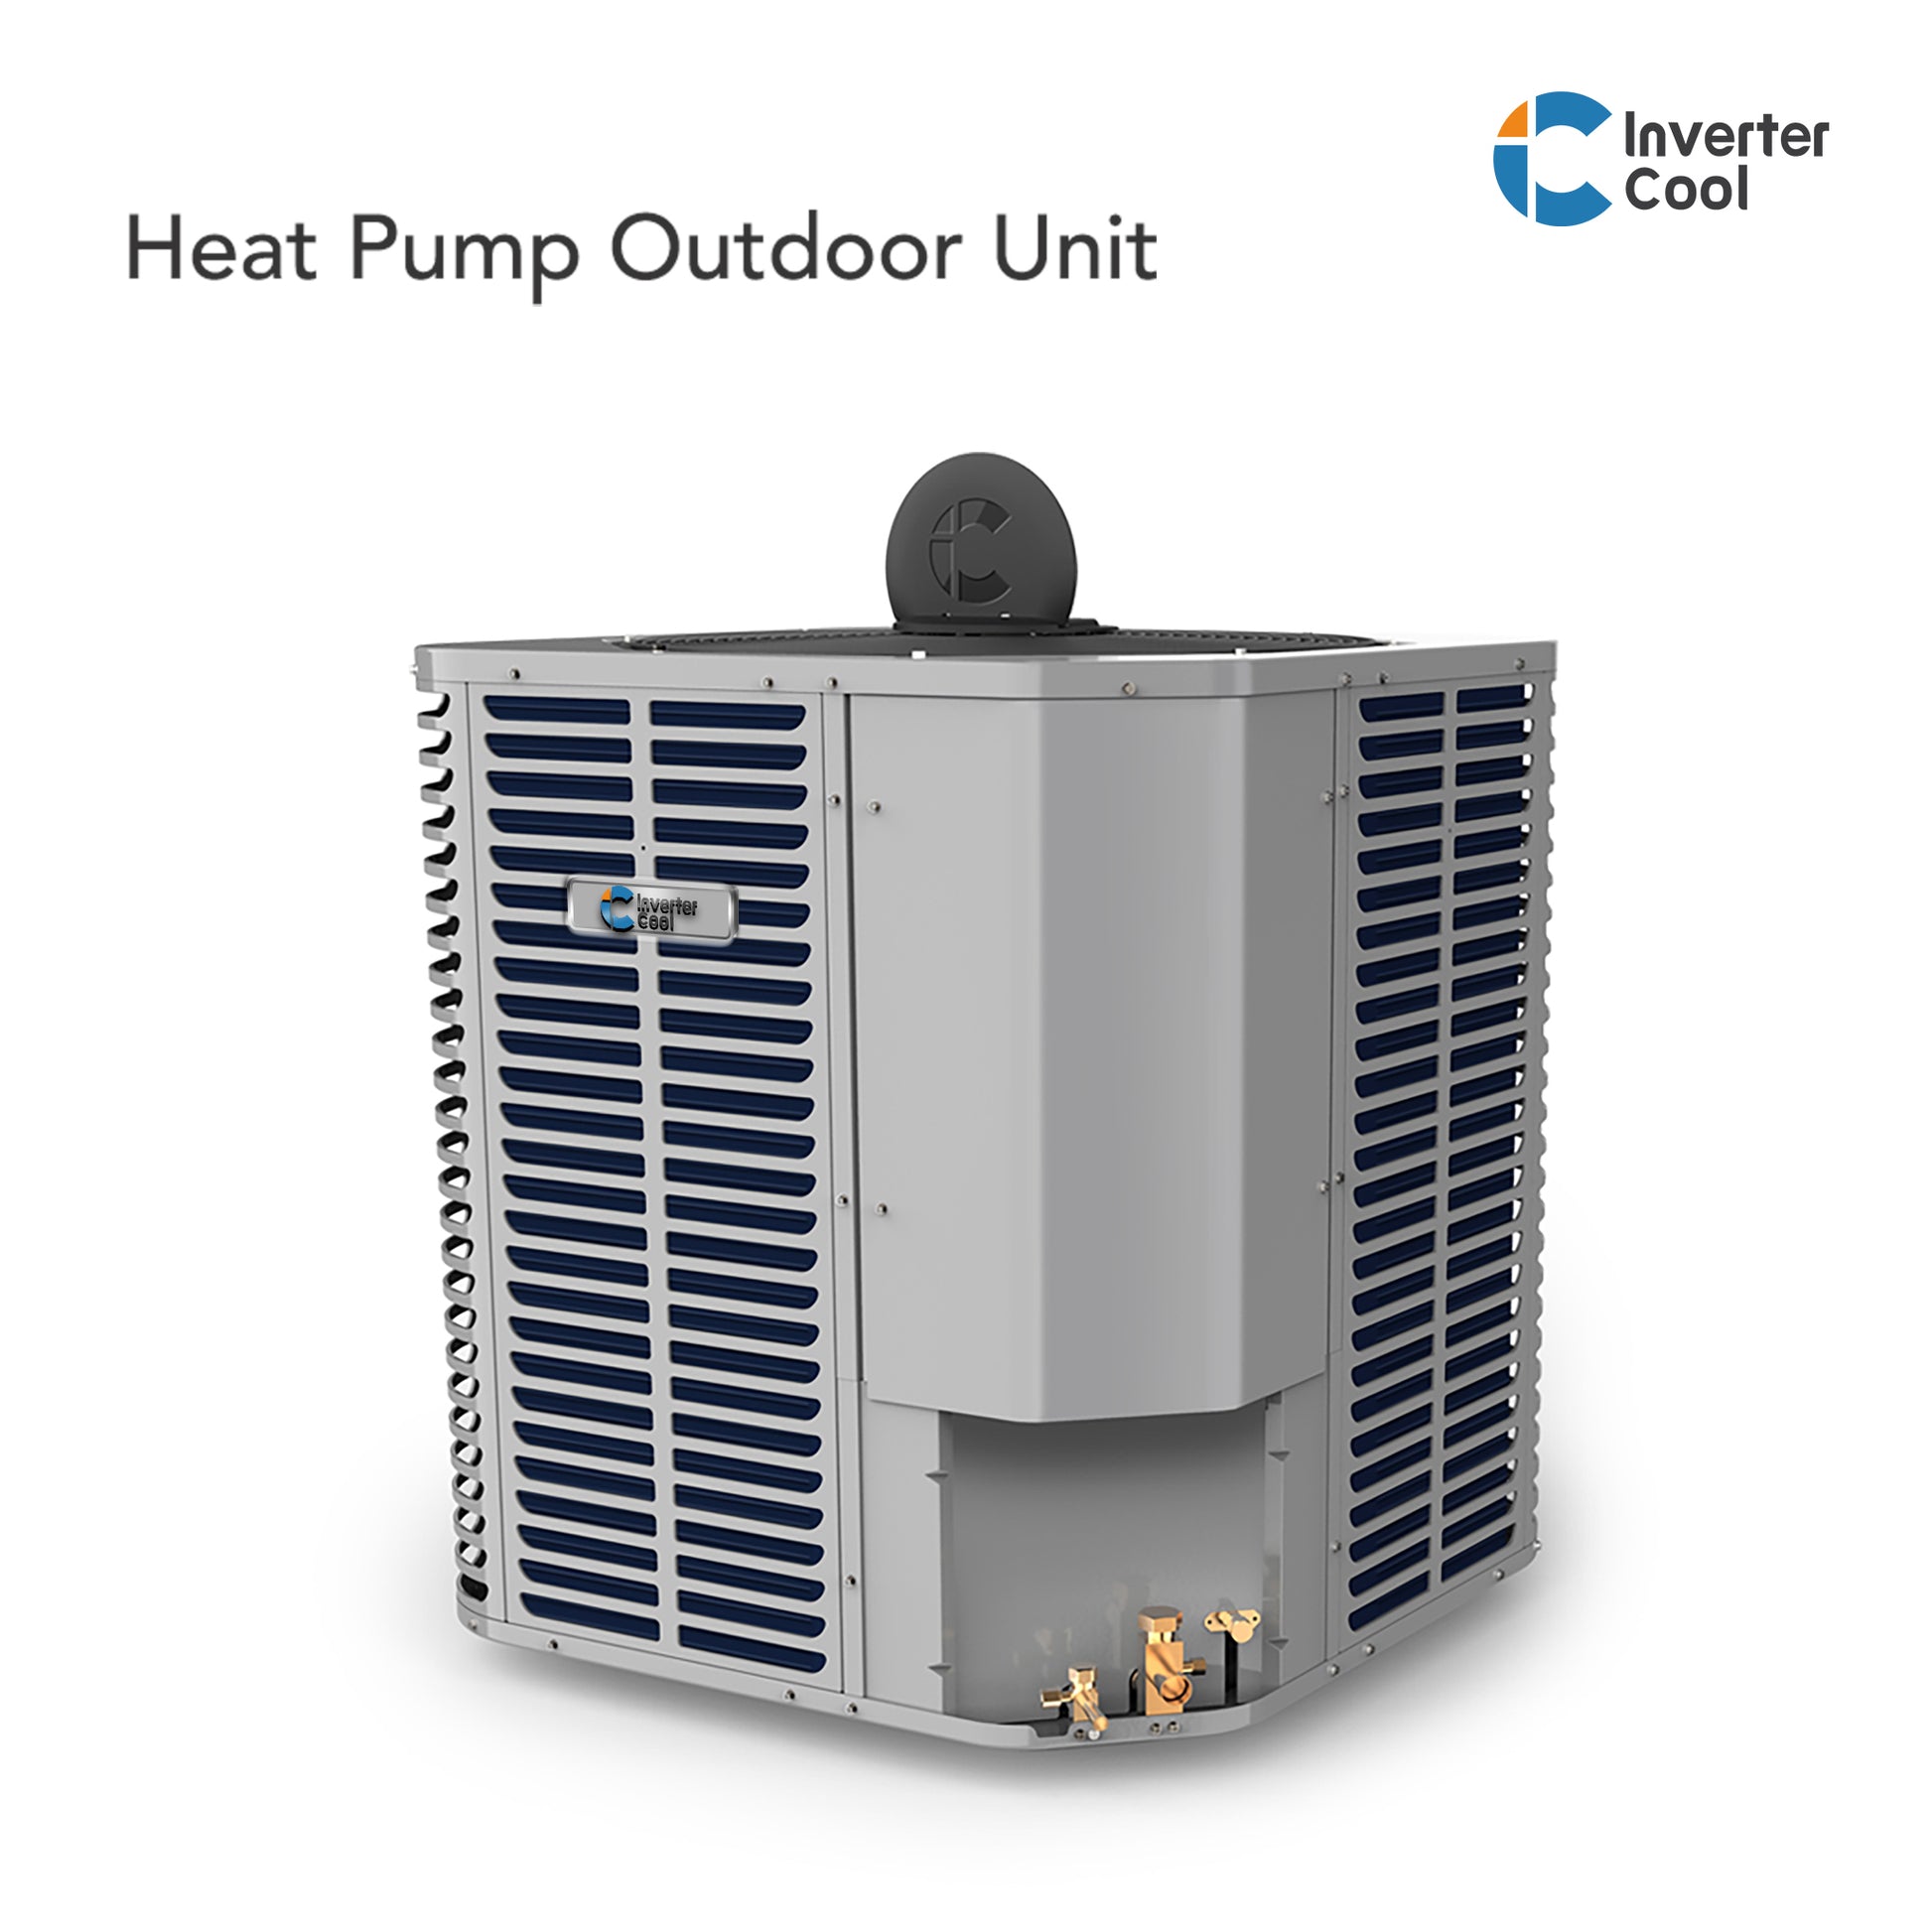 InverterCool® 4-5Ton Heat Pump Condenser Unit